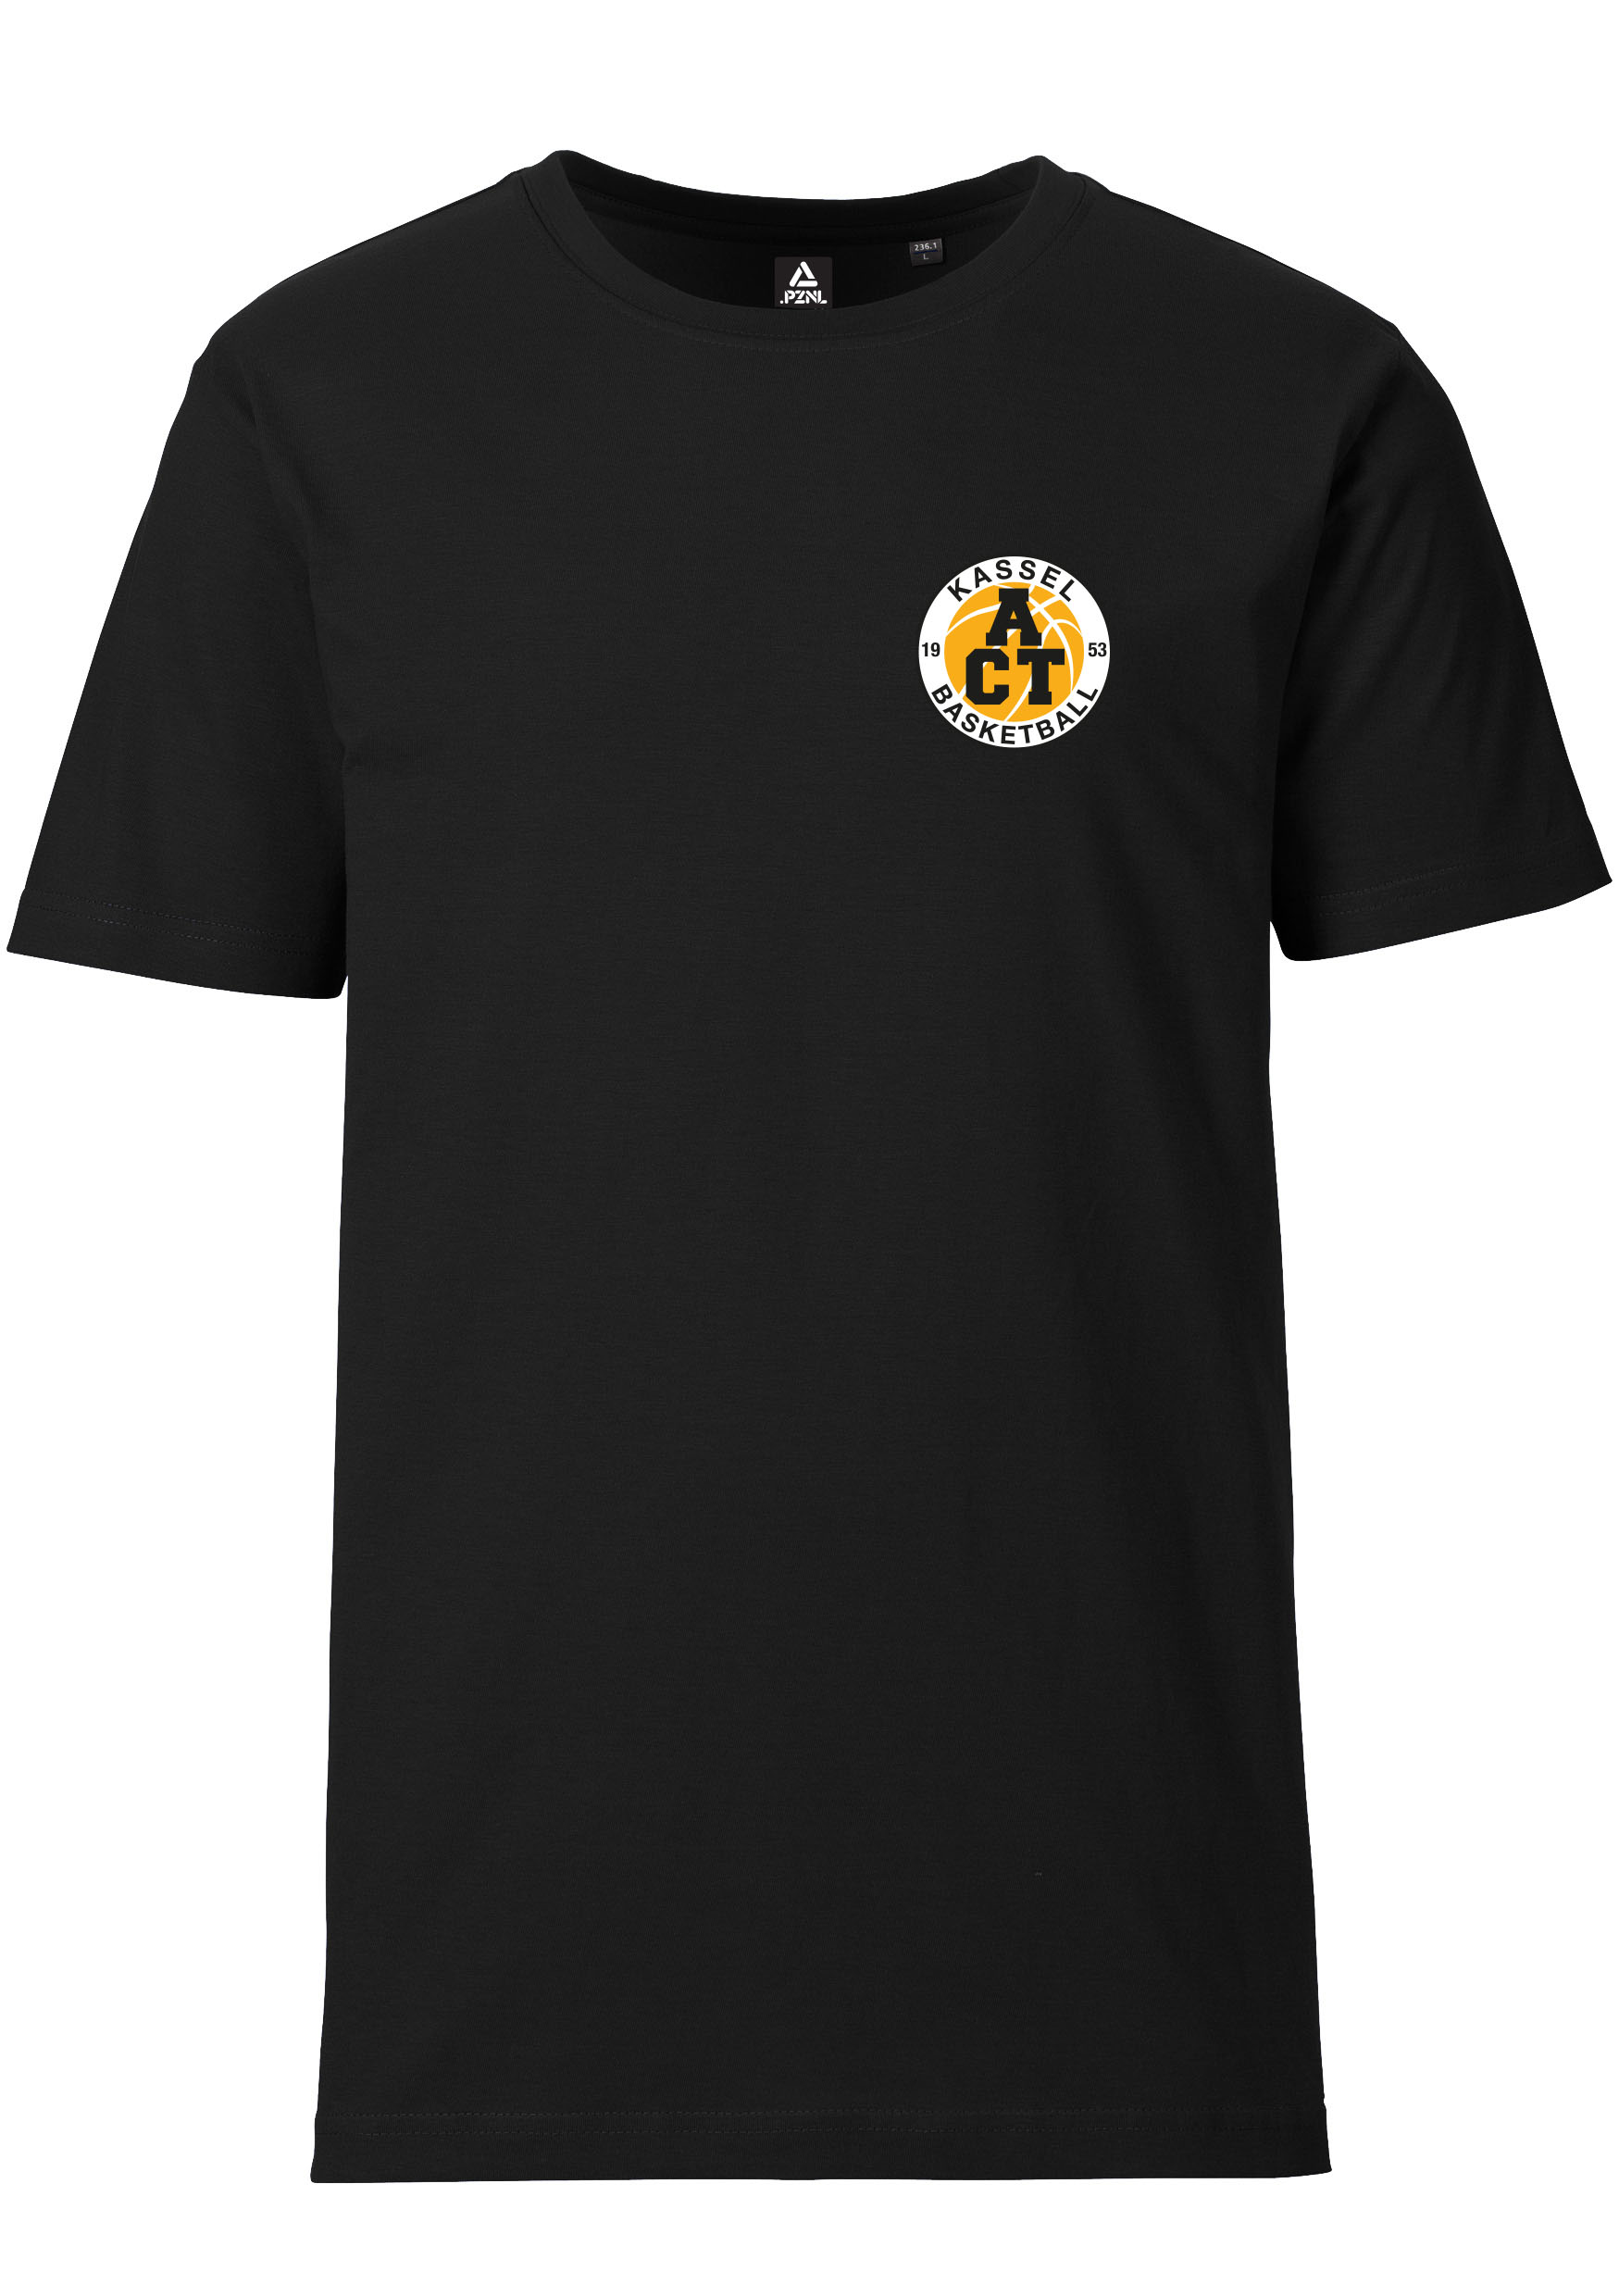 ACT Basketball Logo T-Shirt Herren